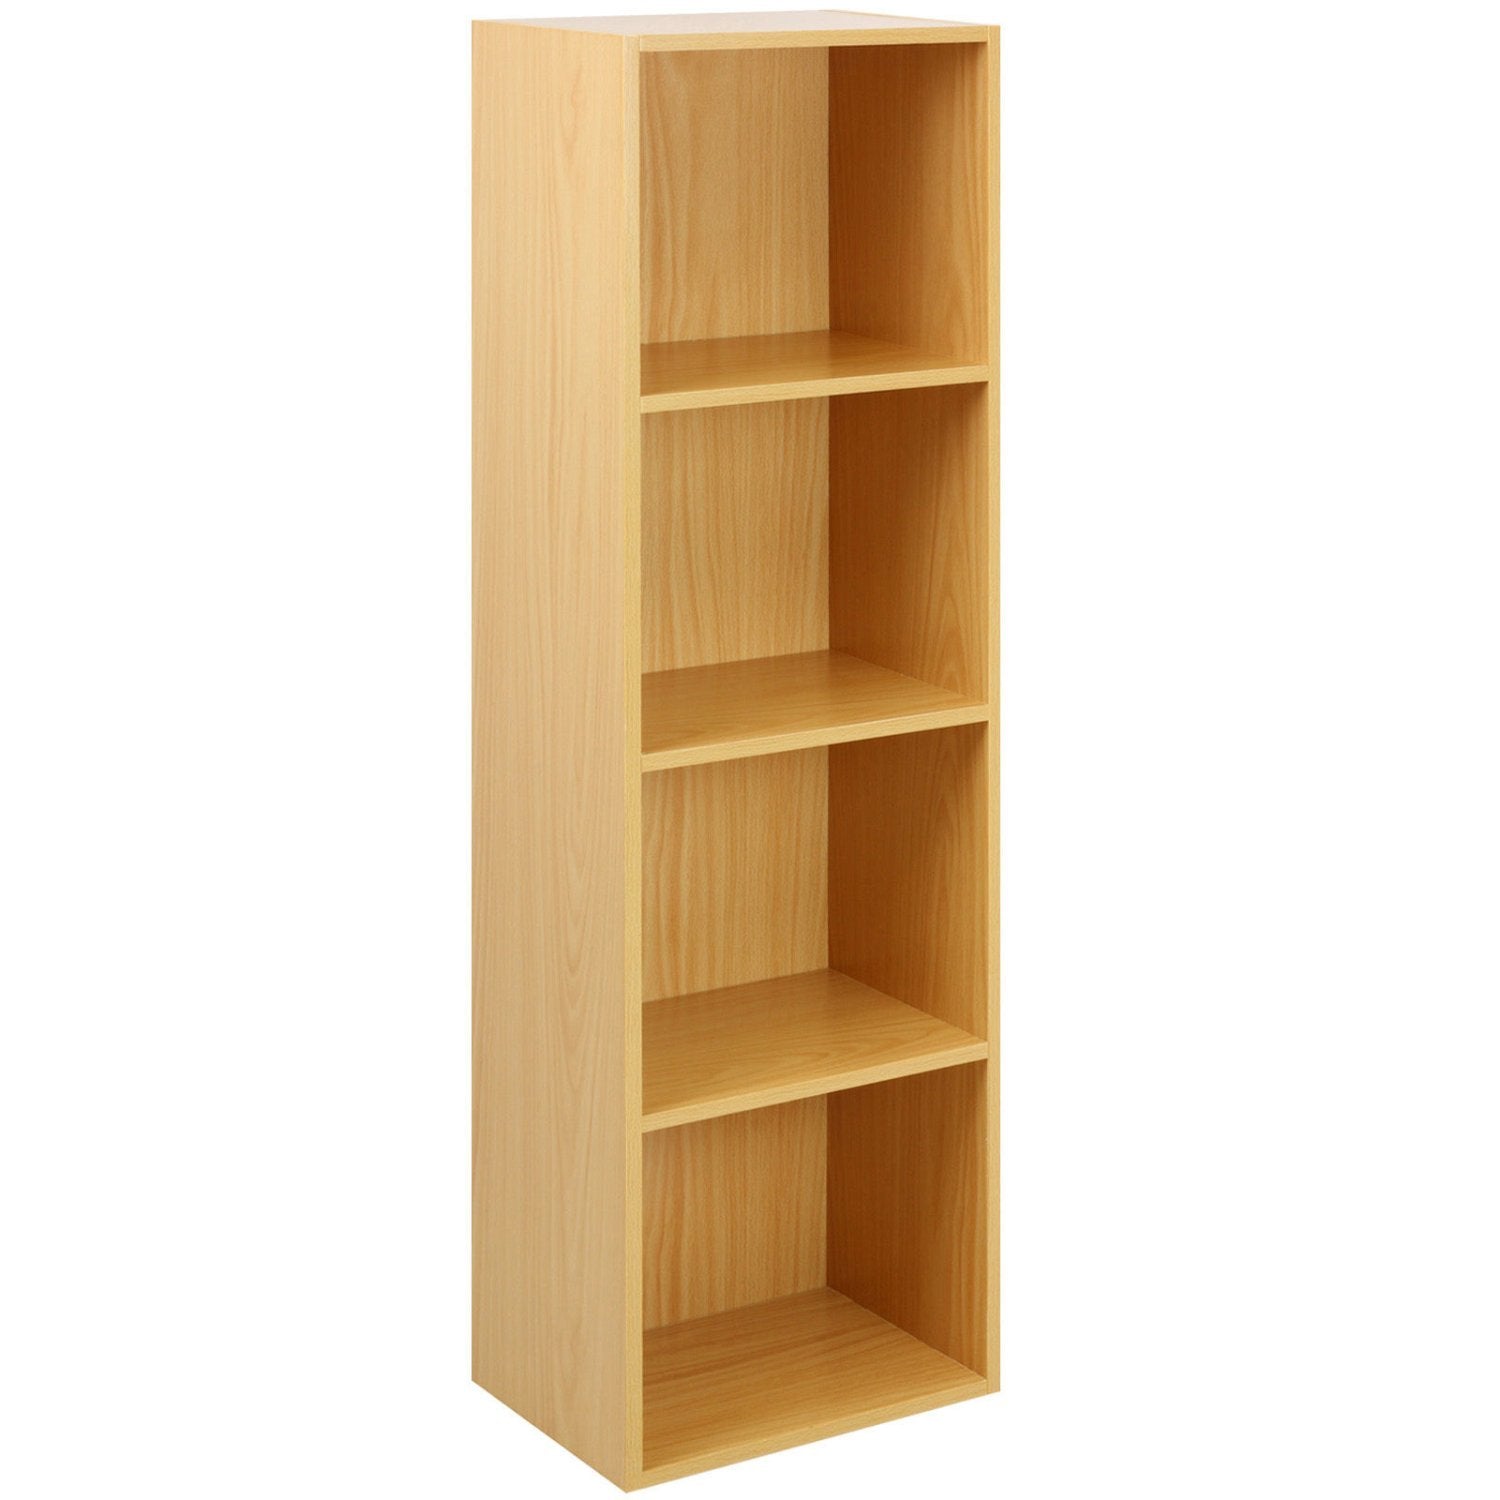 4-tier-wooden-shelf-beech-bookcase-shelving-storage-display-rack-15329530871905 Home Office Garden | HOG-HomeOfficeGarden | HOG-Home.Office.Garden